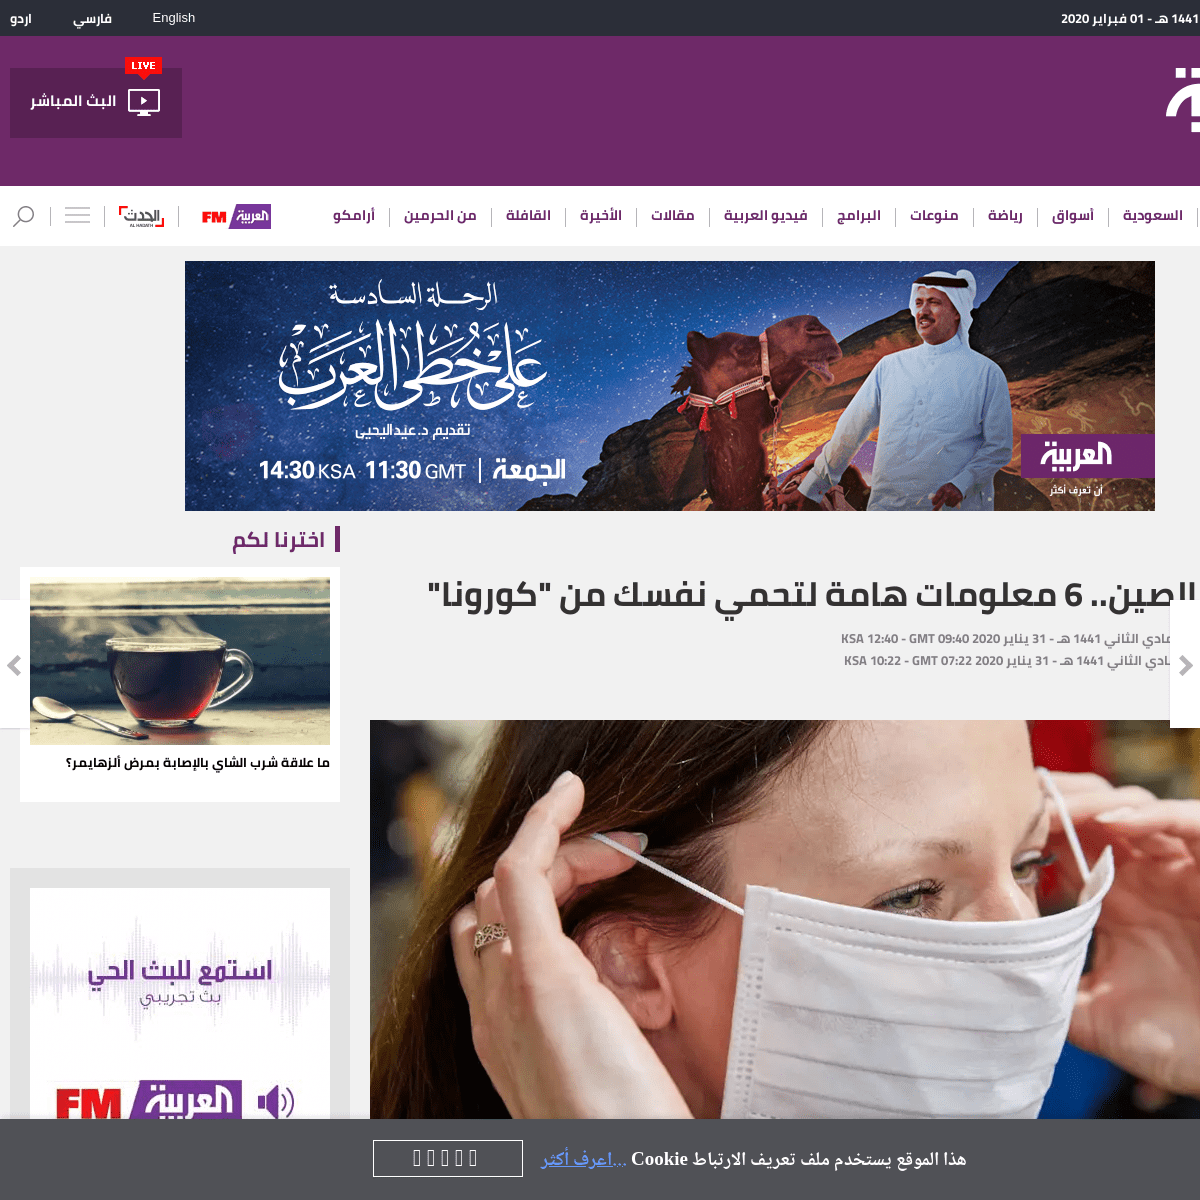 A complete backup of www.alarabiya.net/ar/medicine-and-health/2020/01/31/%D9%85%D9%86-%D8%AF%D8%A7%D8%AE%D9%84-%D8%A7%D9%84%D8%B